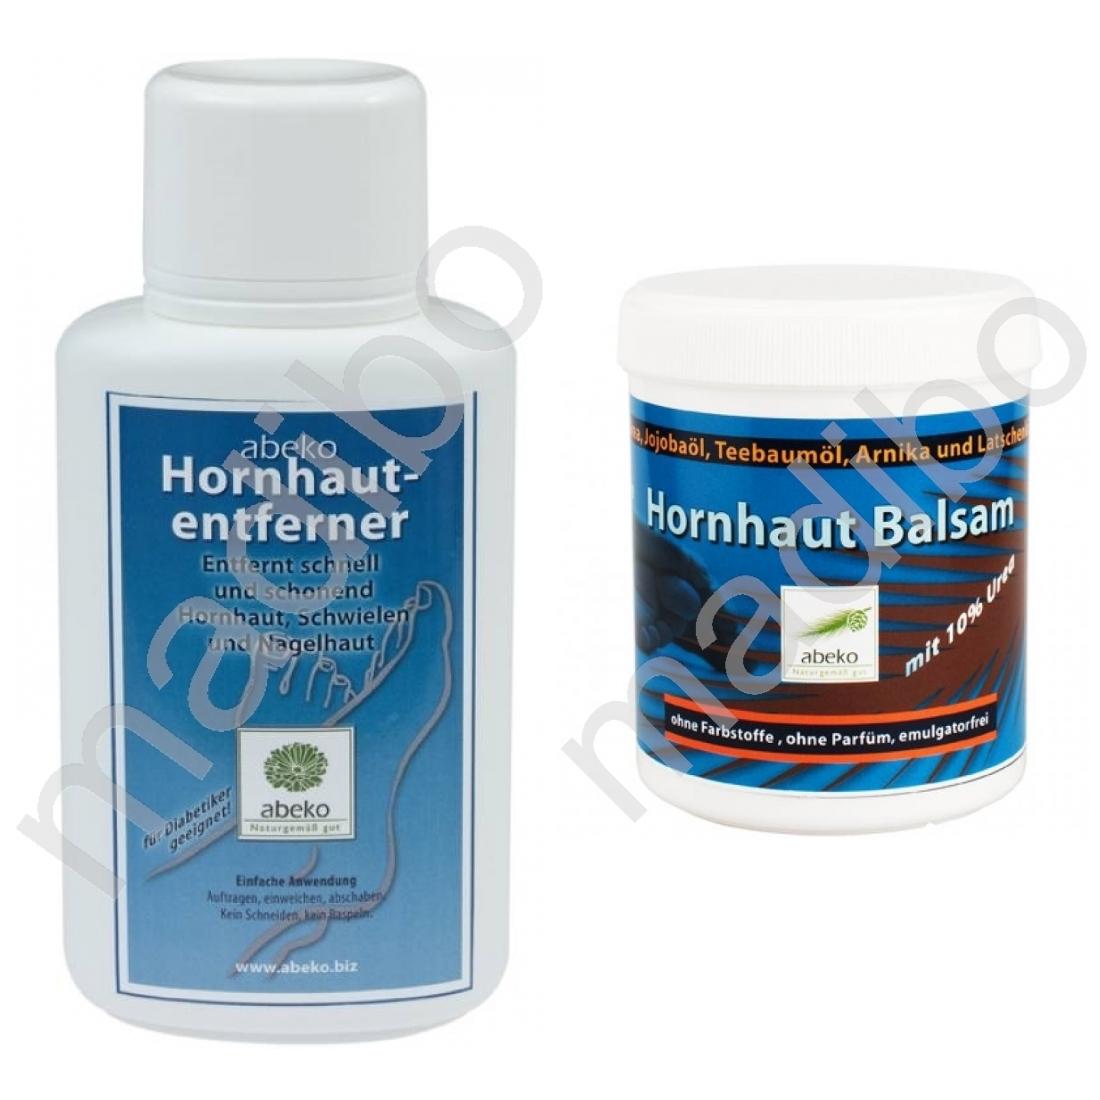 abeko Hornhautentferner 250 ml + Hornhaut Balsam enthält 10% Urea ohne Farbstoffe 250 ml